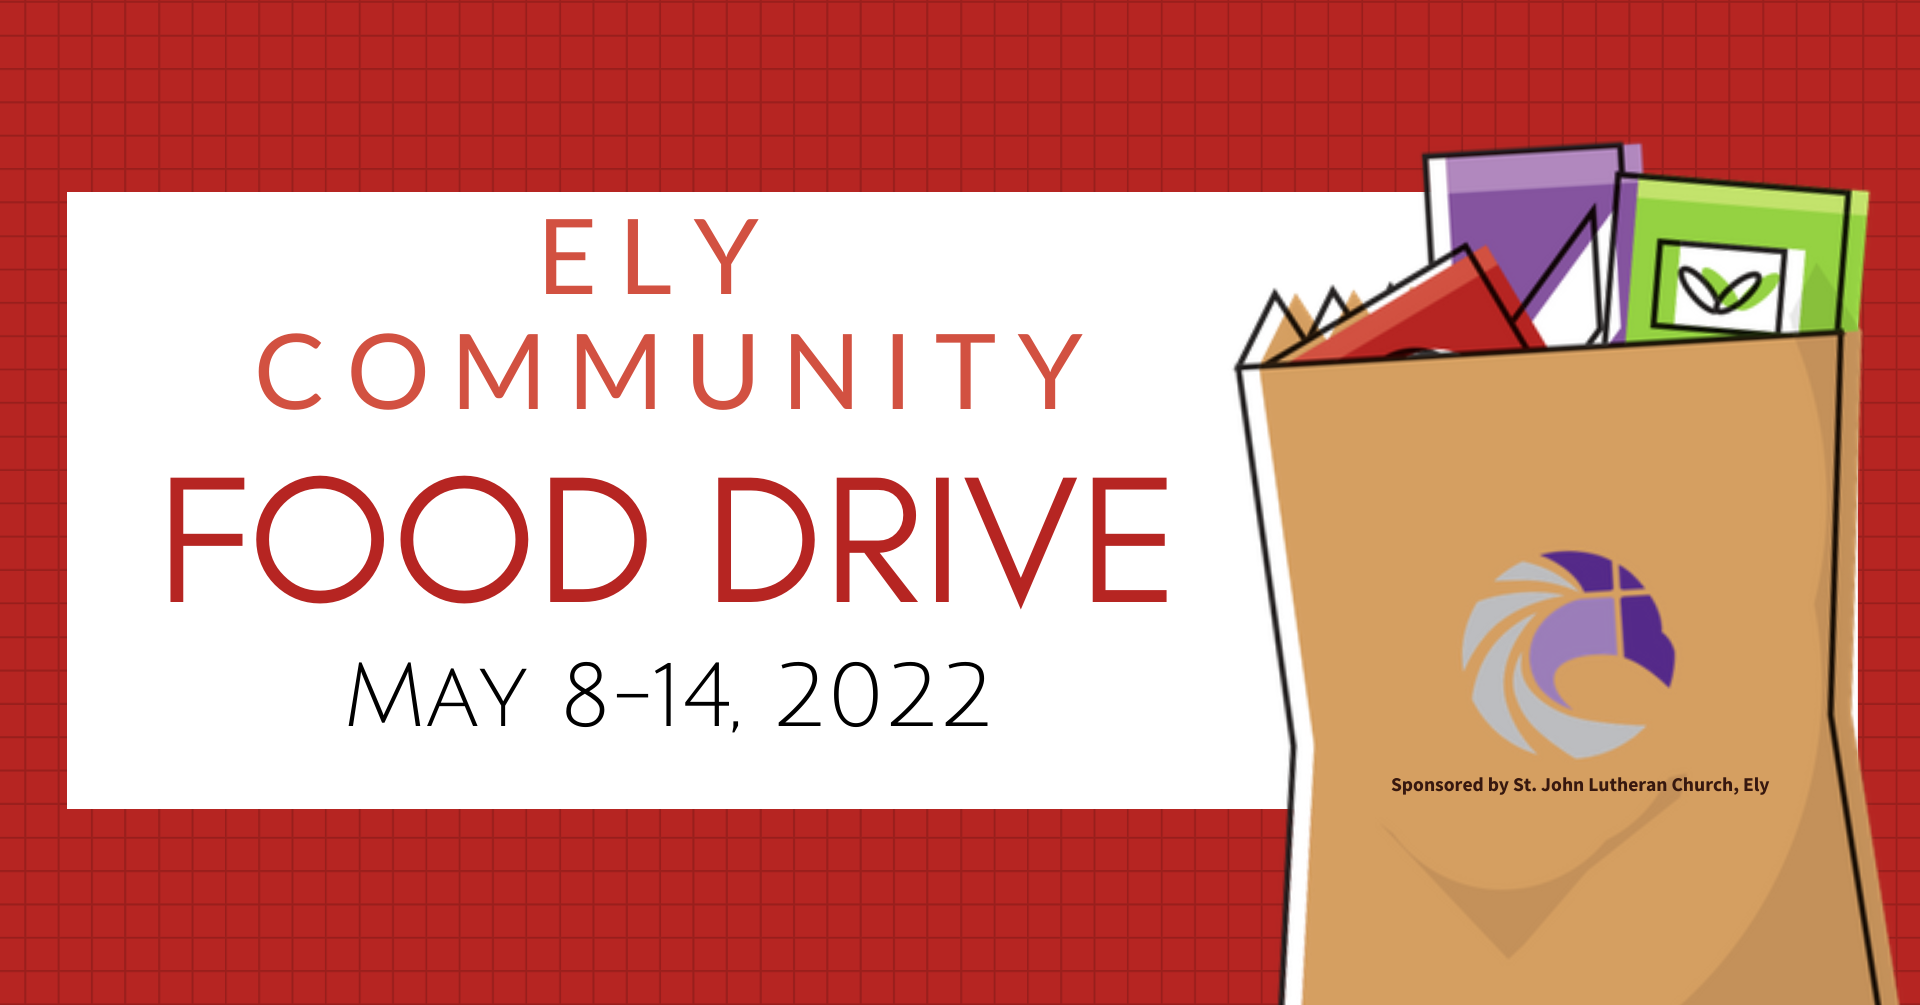 Ely Community Food Drive